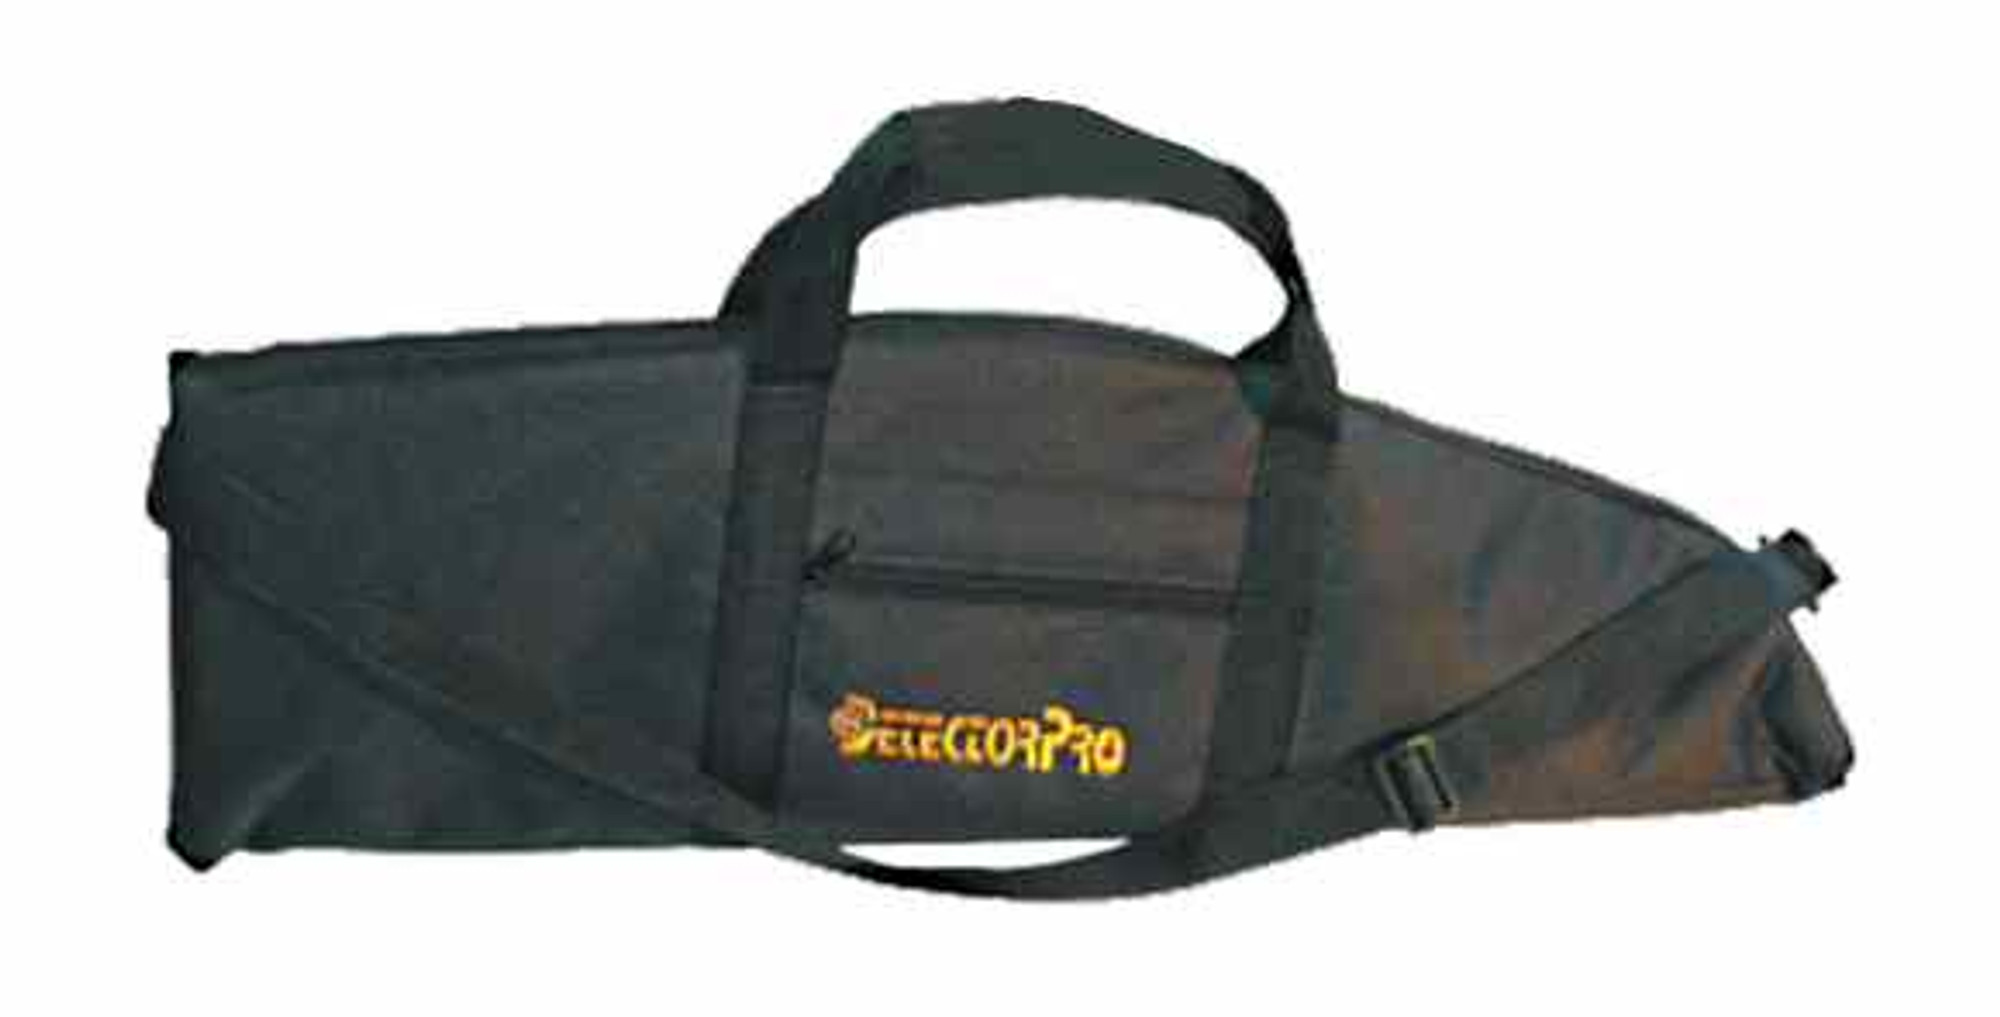 DetectorPro Carry Bag